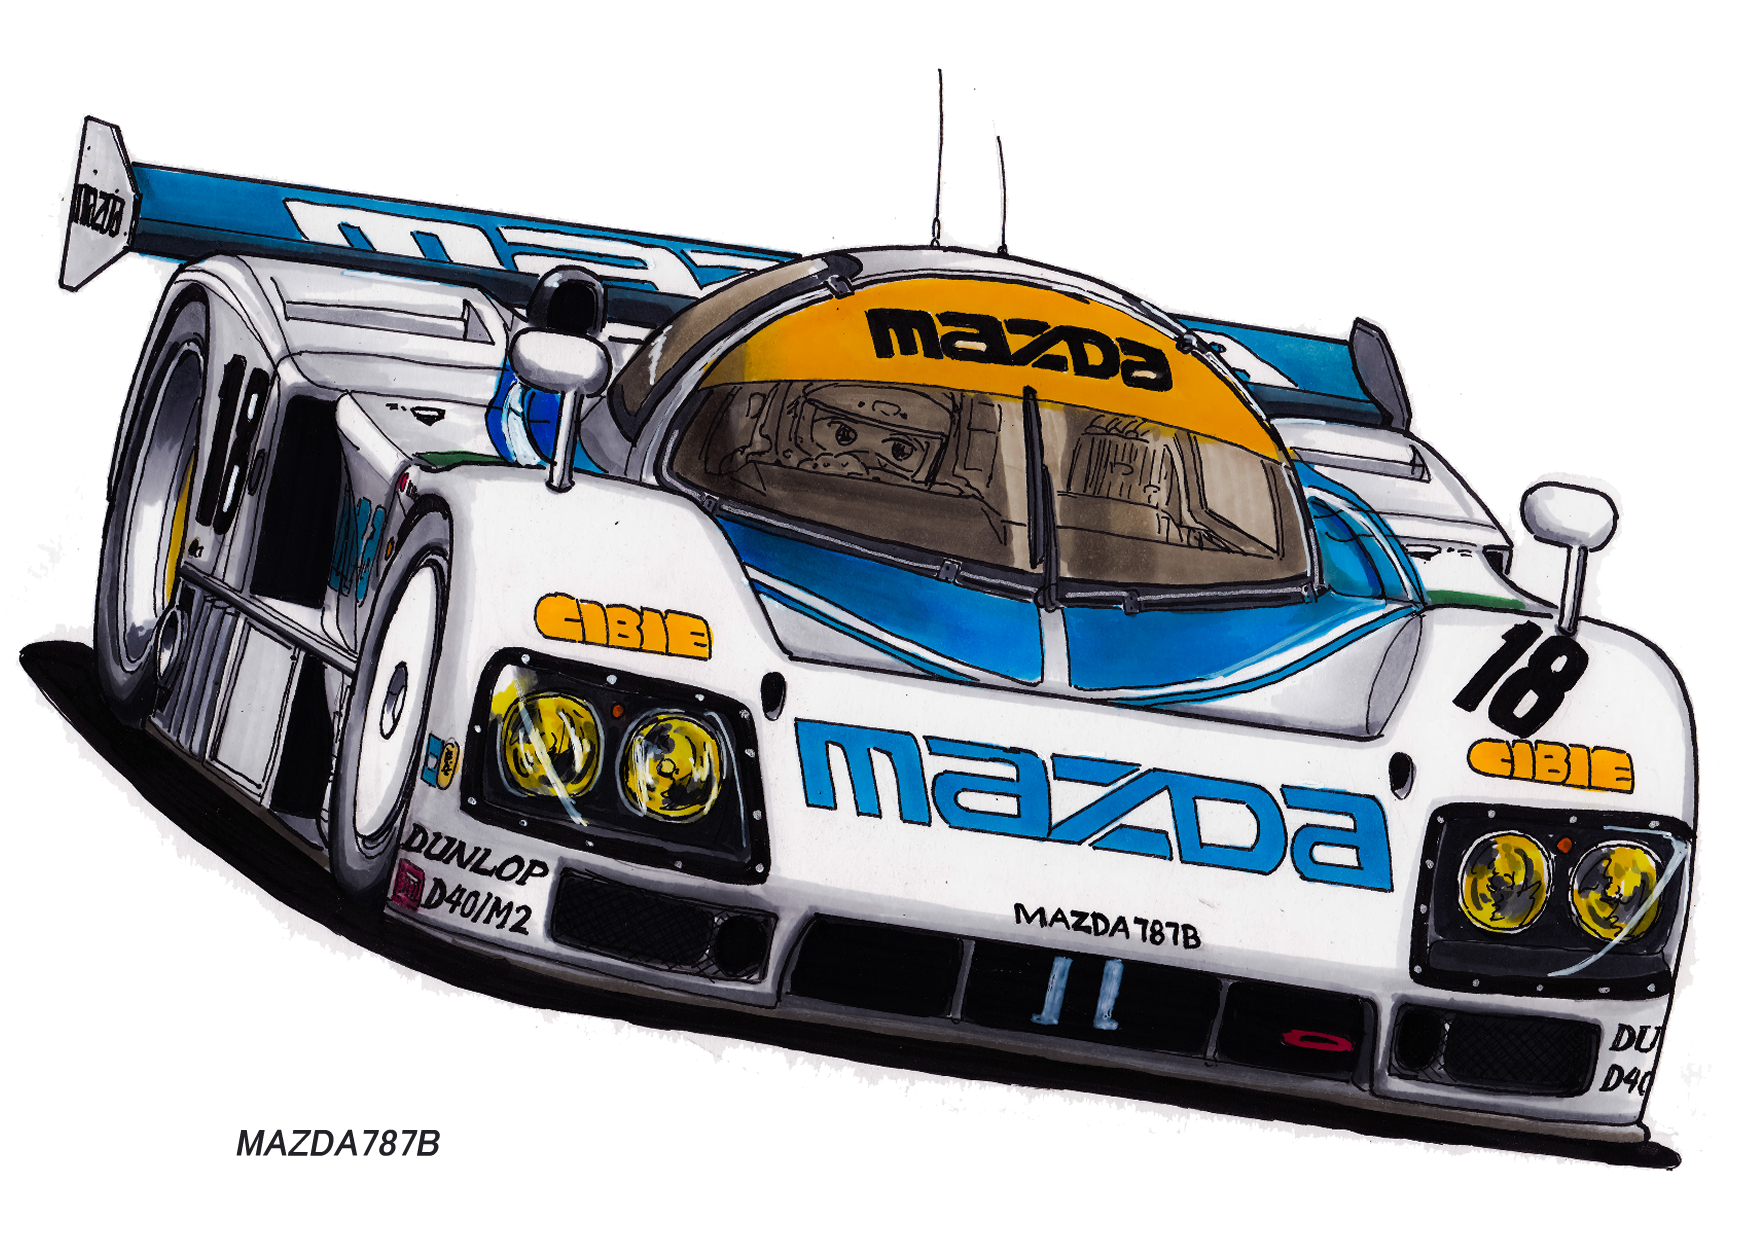 General 1748x1240 car Mazda 787B sports car Le Mans Prototype race cars Mazda livery Japanese cars